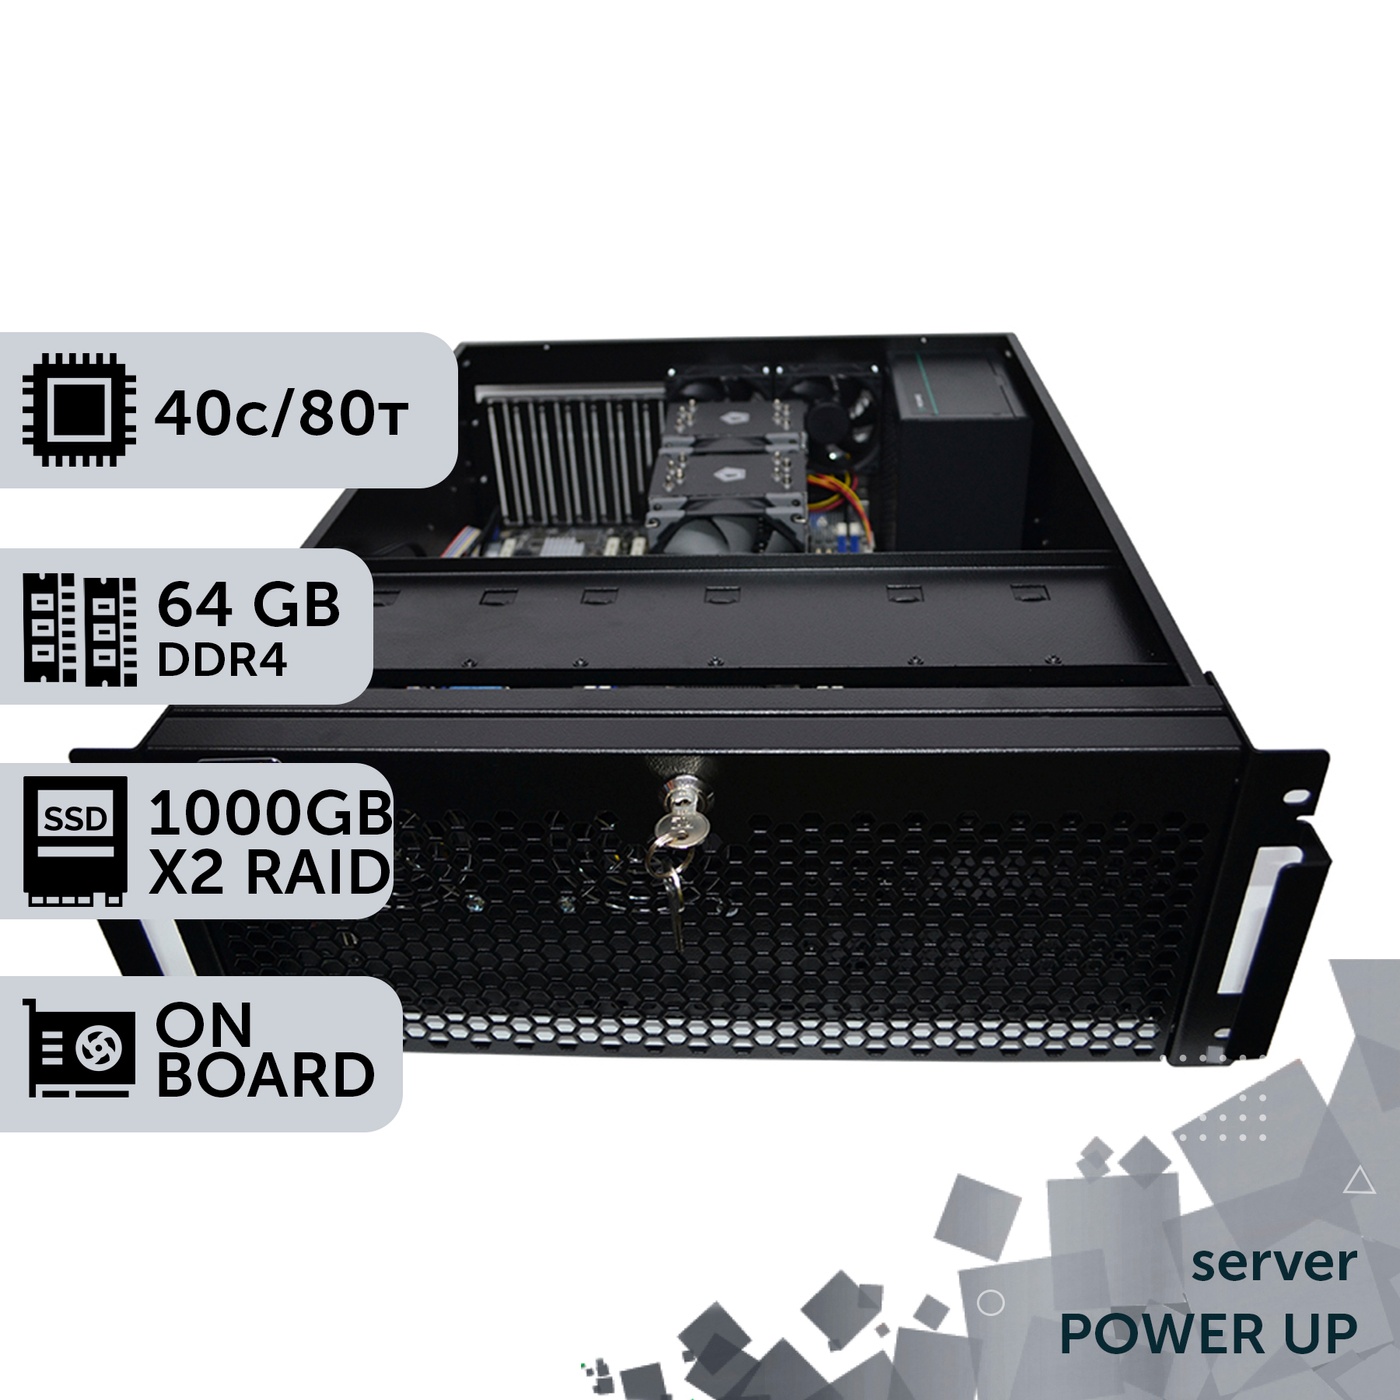 Сервер двухпроцессорный TOWER PowerUp #80 Xeon E5 2673 v4 x2/64 GB/SSD 1TB х2 Raid/Int Video